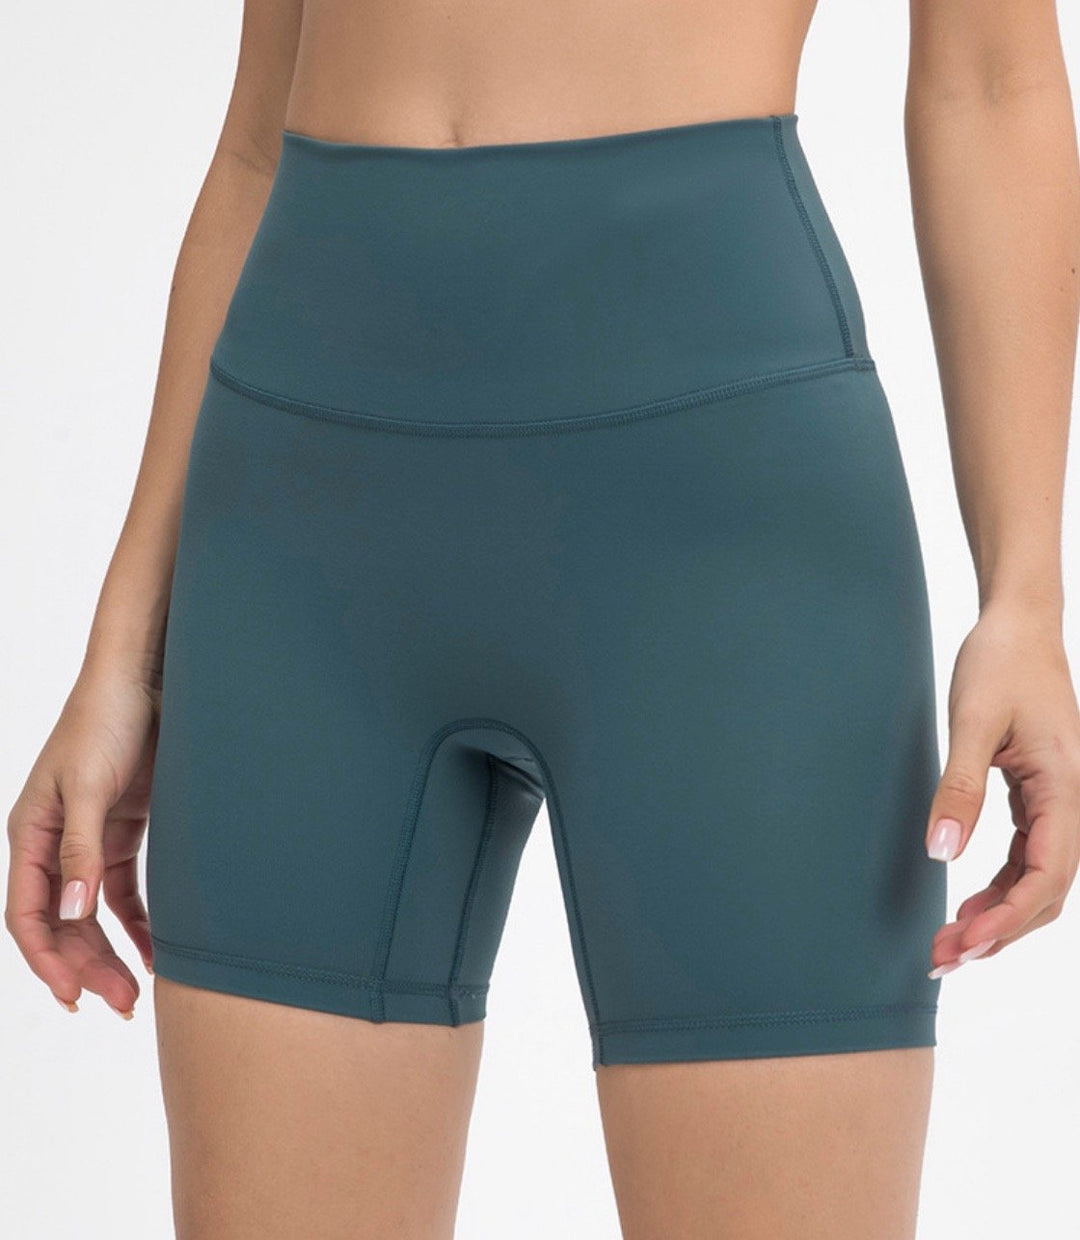 Easy Sprint 6” *Seamless Shorts in Fern Green